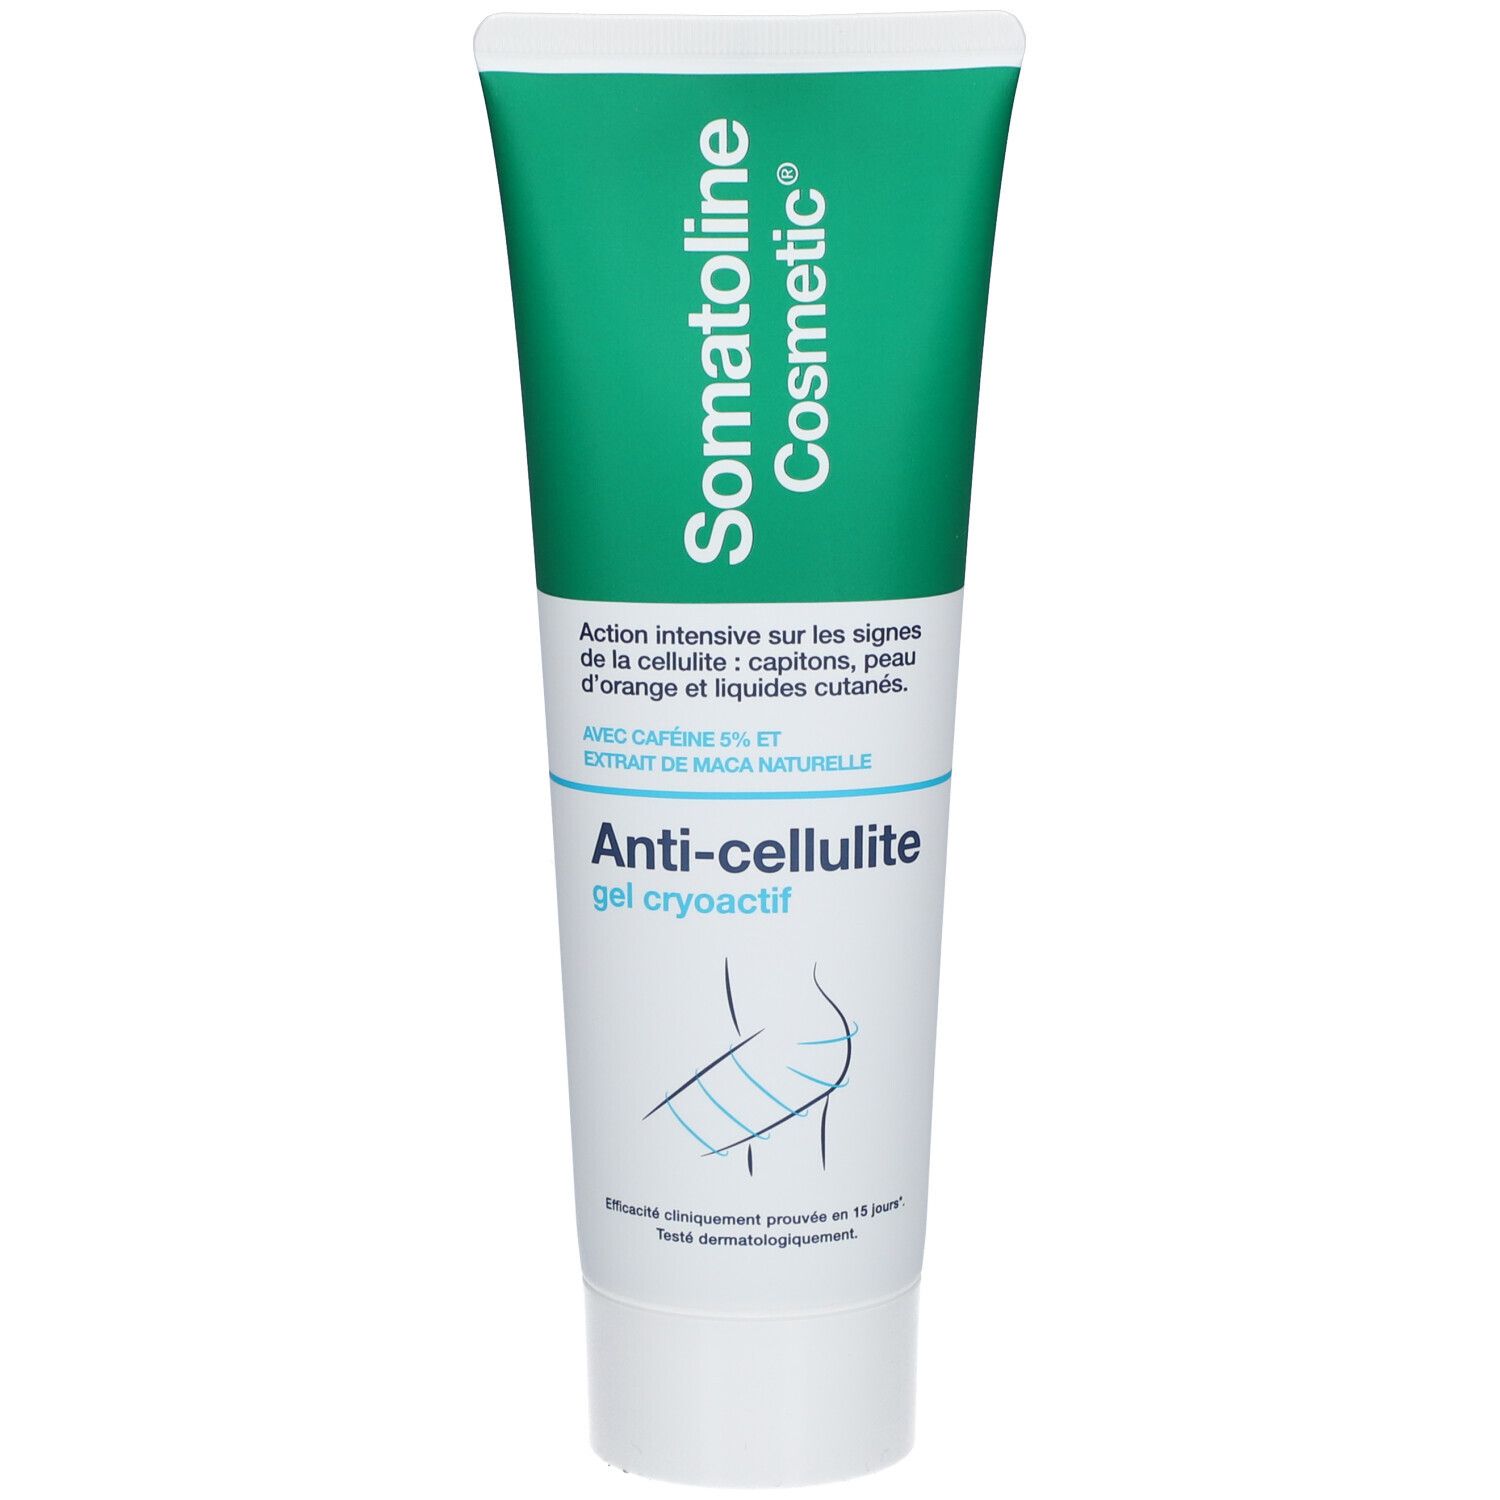 Somatoline Cosmetic® Anti-Cellulite Cryoactif Gel